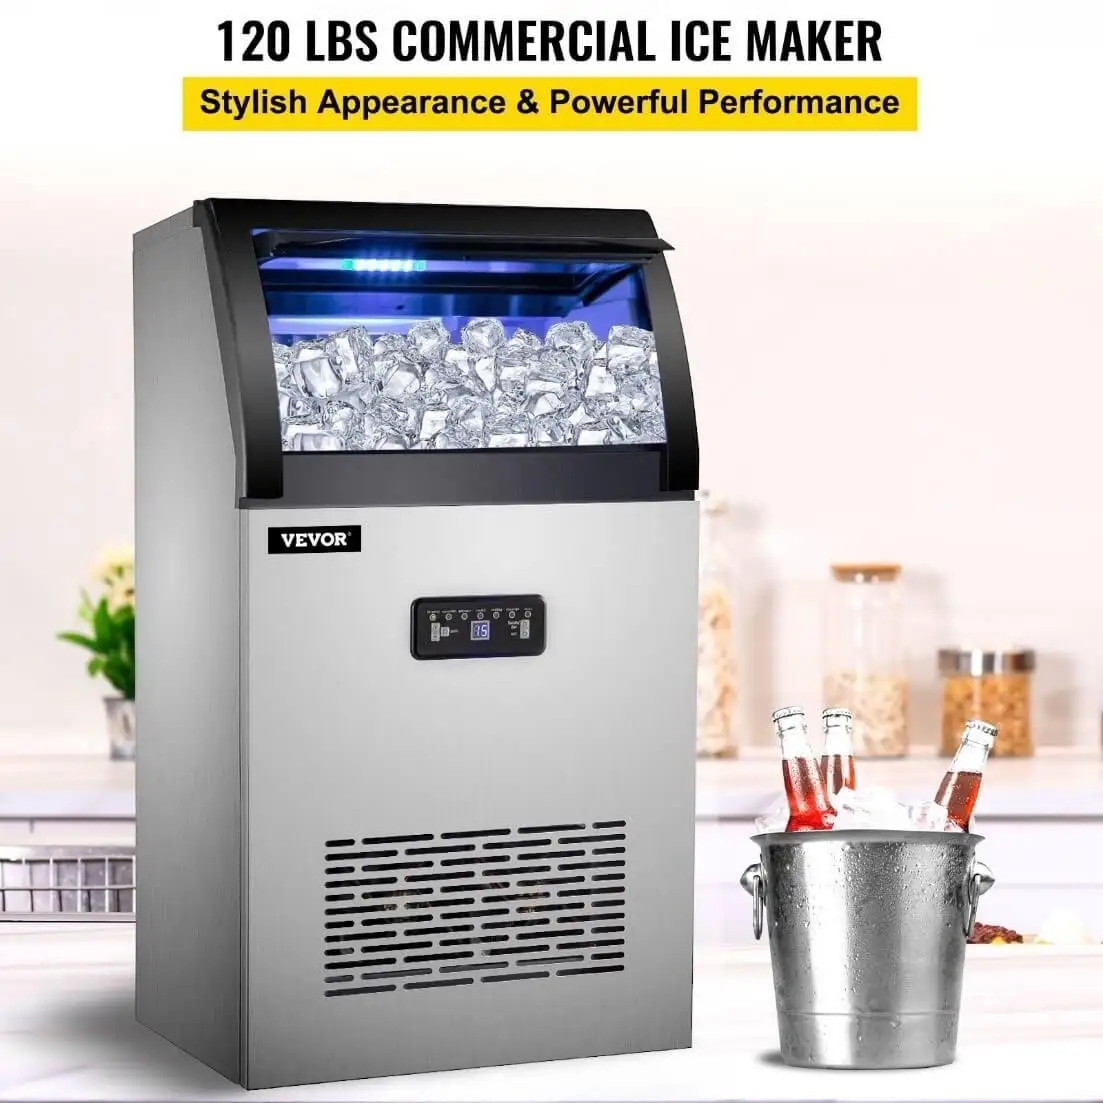 Best Nugget Ice Maker 2023 - Black Friday Ice Maker Sale